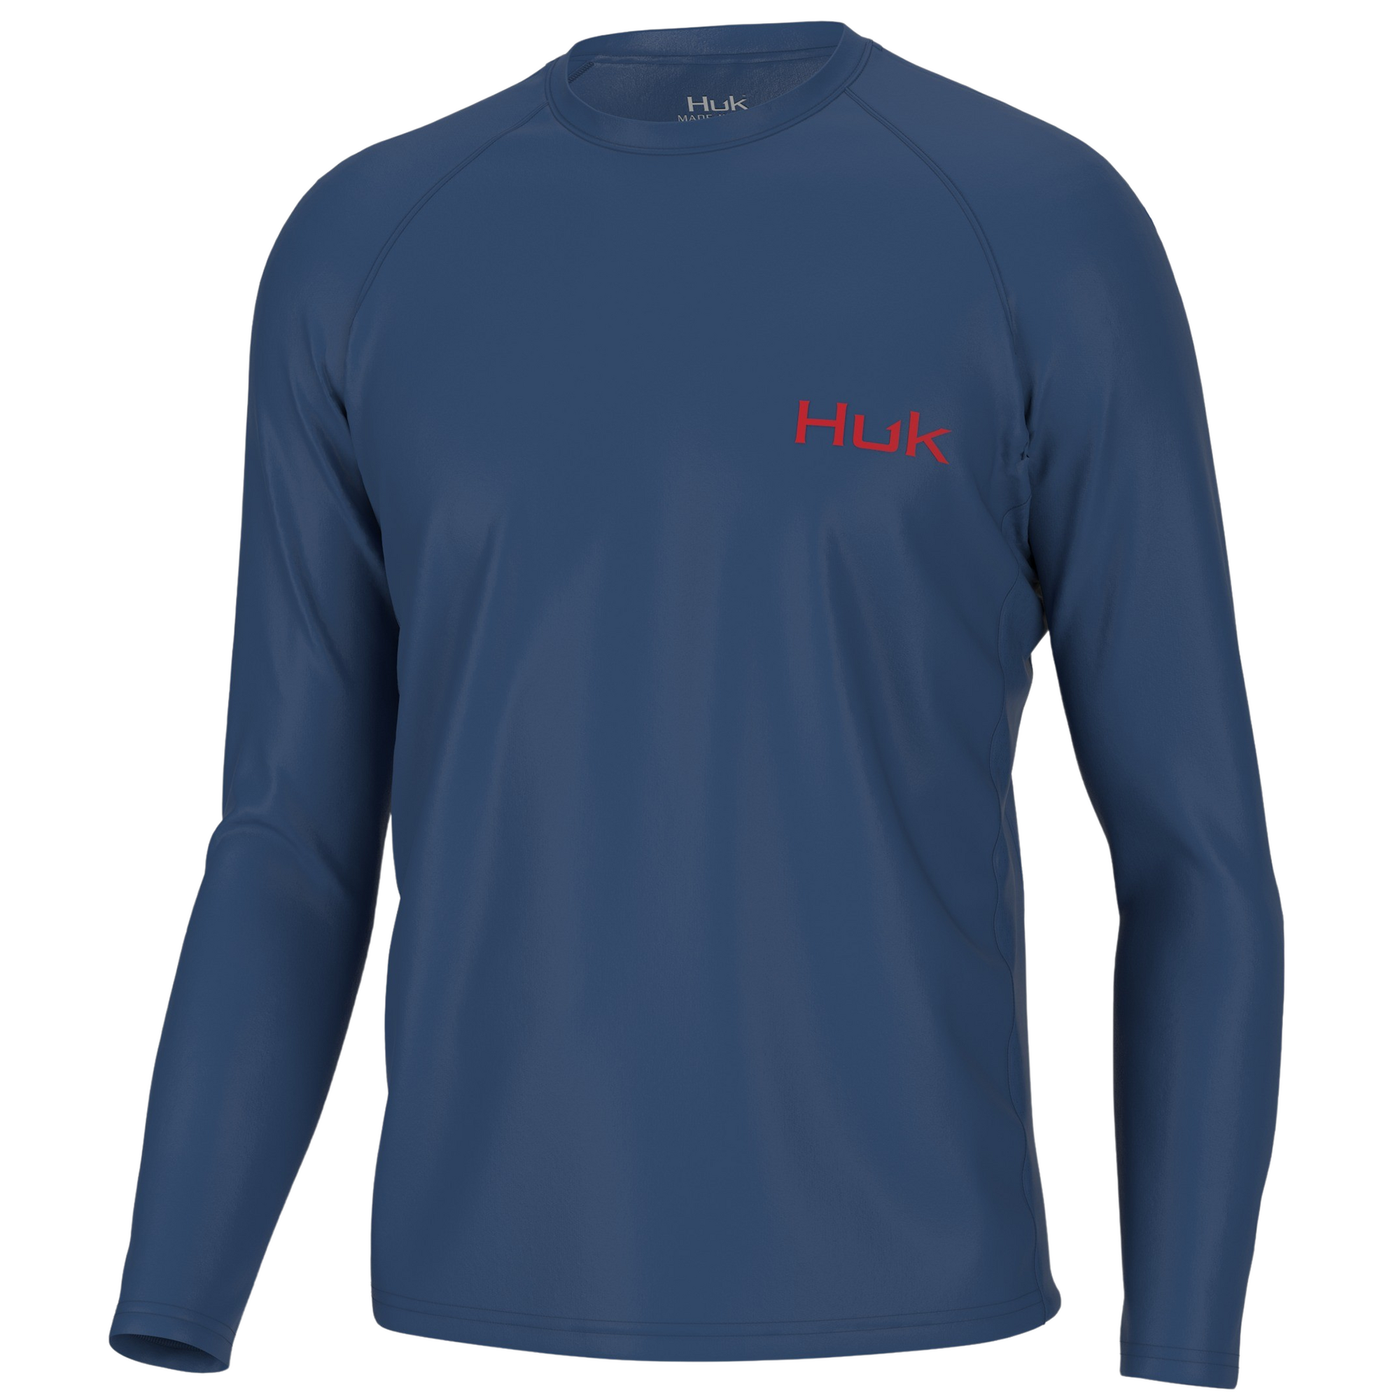 Huk Fishing Shirt Mens XL White Short Sleeve Double Sided Flag Fish Logo